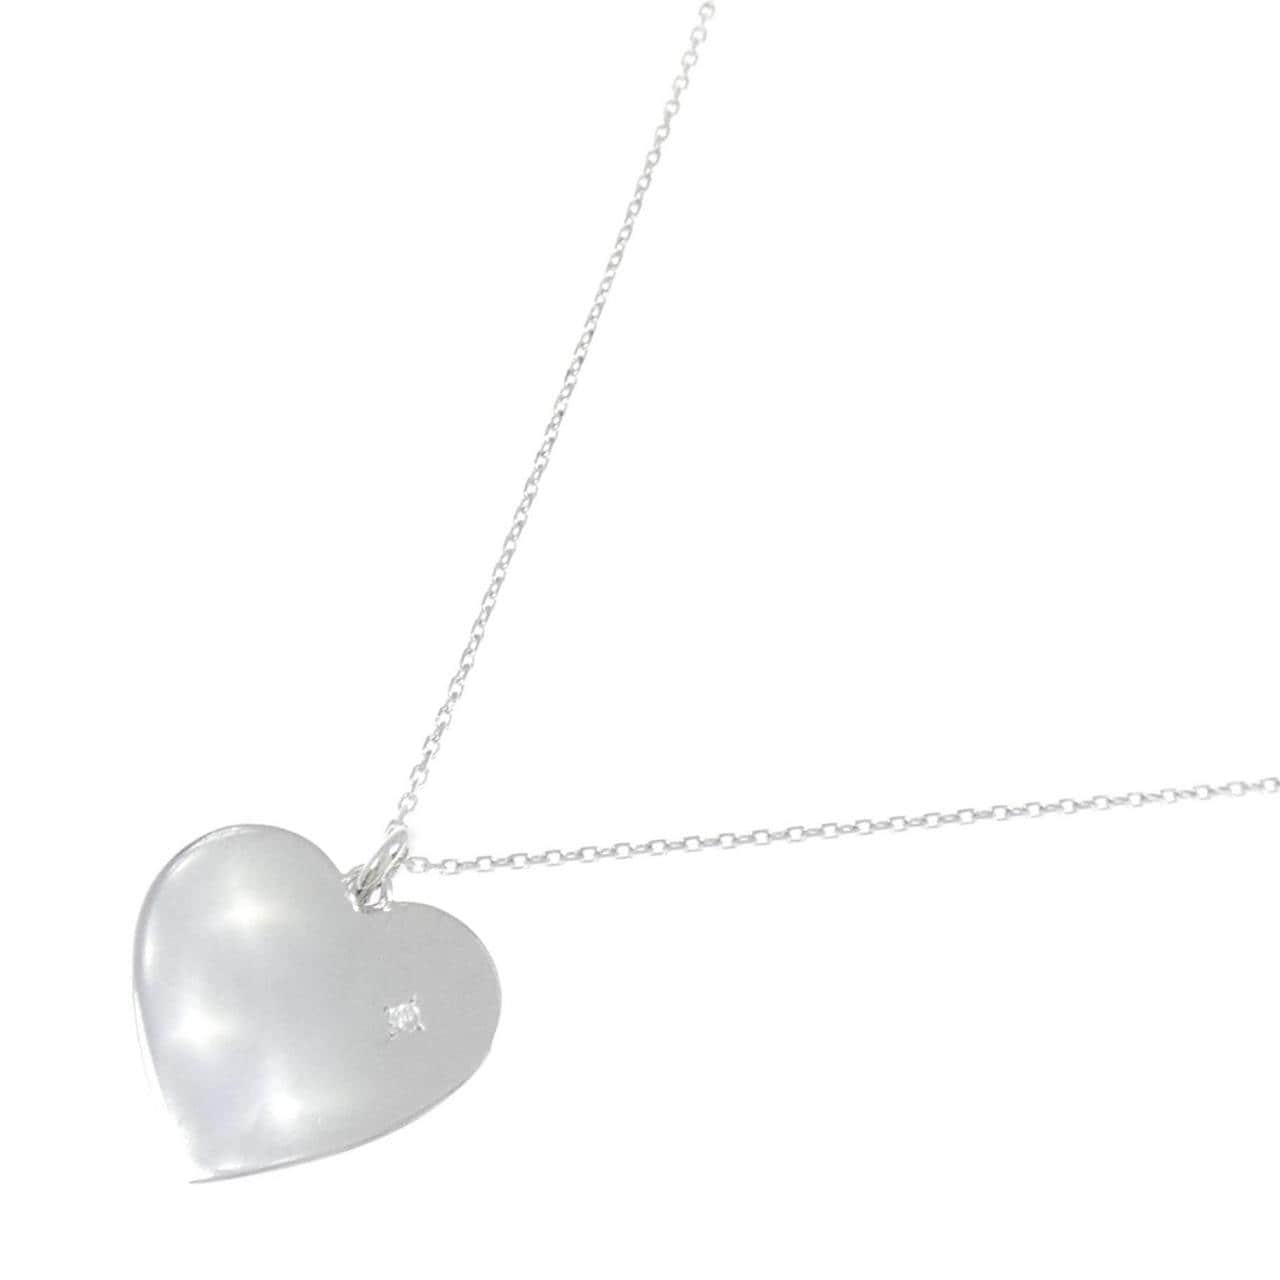 K18WG heart Diamond necklace 0.01CT